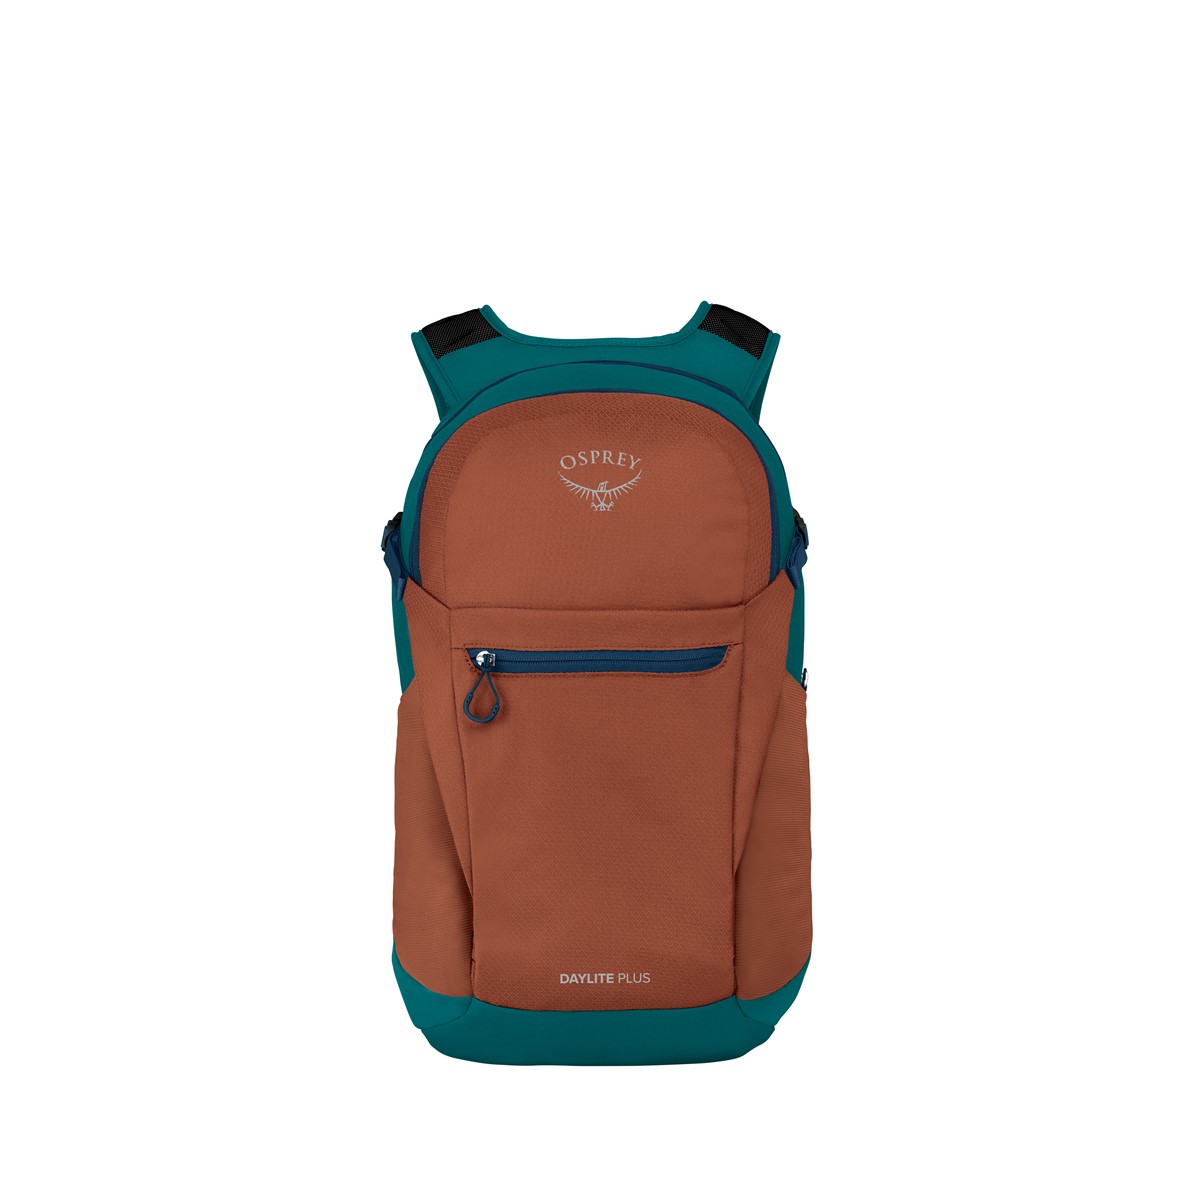 Daylite Plus Backpack in Orange/Blue